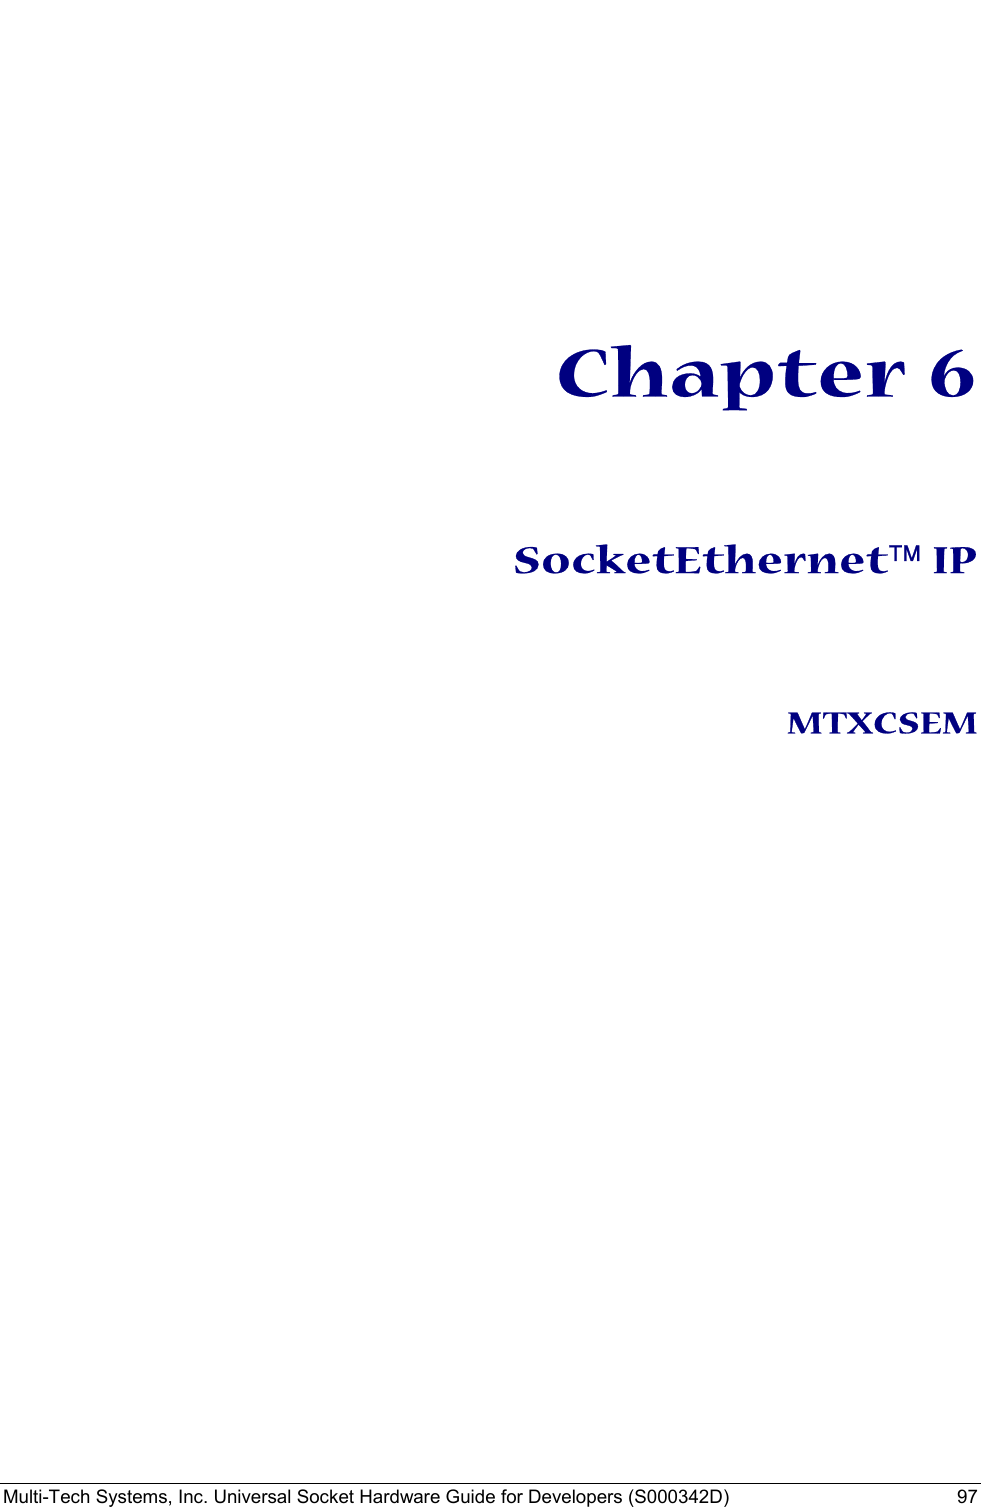  Multi-Tech Systems, Inc. Universal Socket Hardware Guide for Developers (S000342D)  97        Chapter 6   SocketEthernet IP   MTXCSEM  